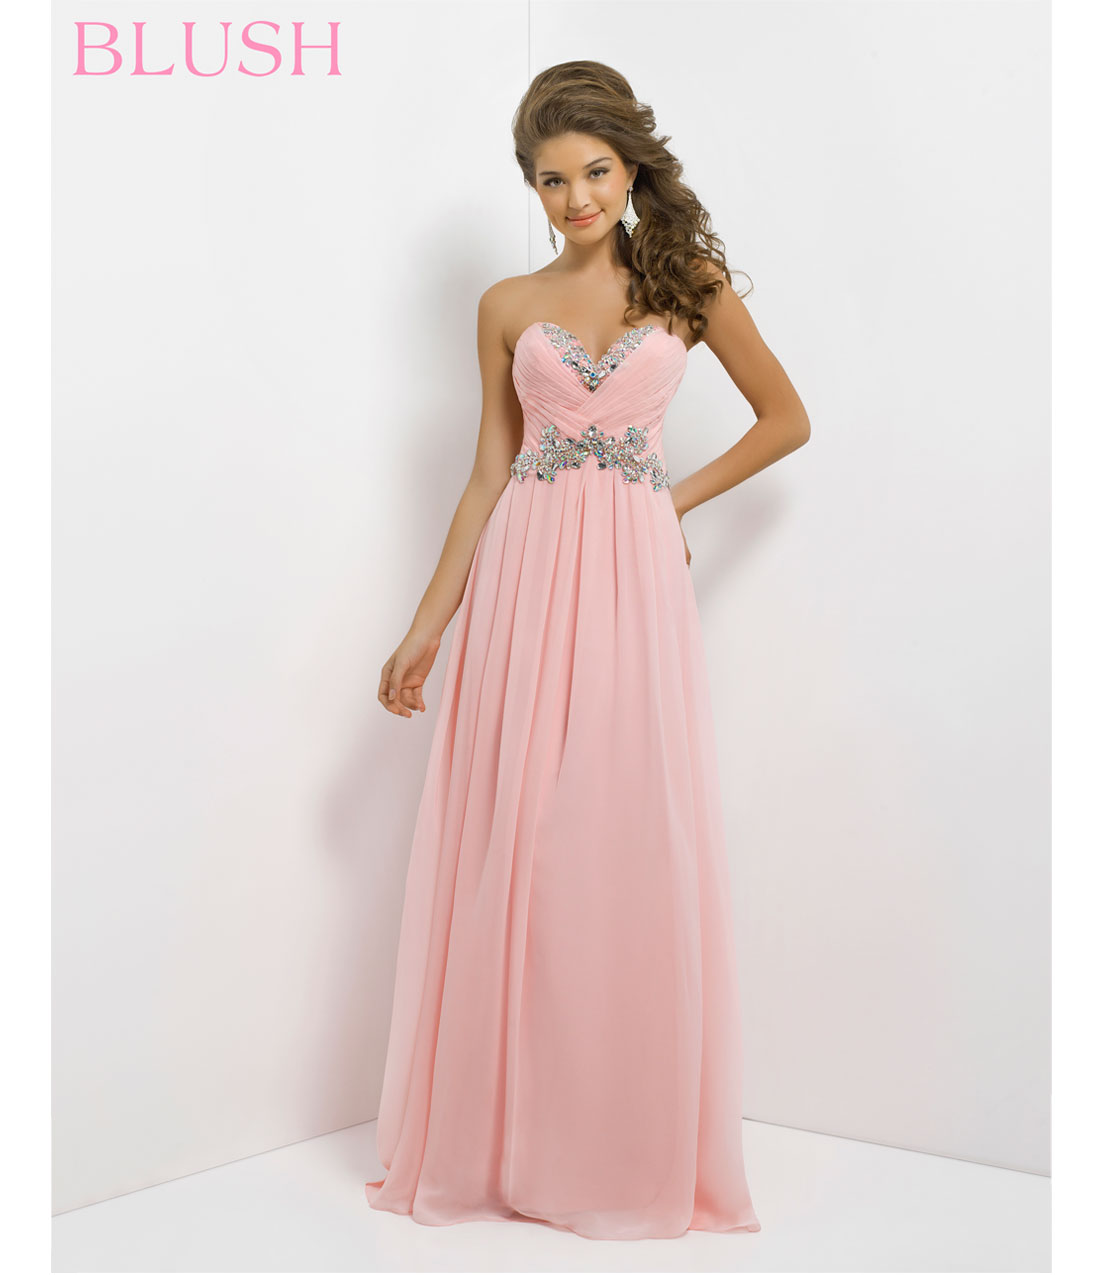 Blush Pink Prom Dress Photo Album - Reikian